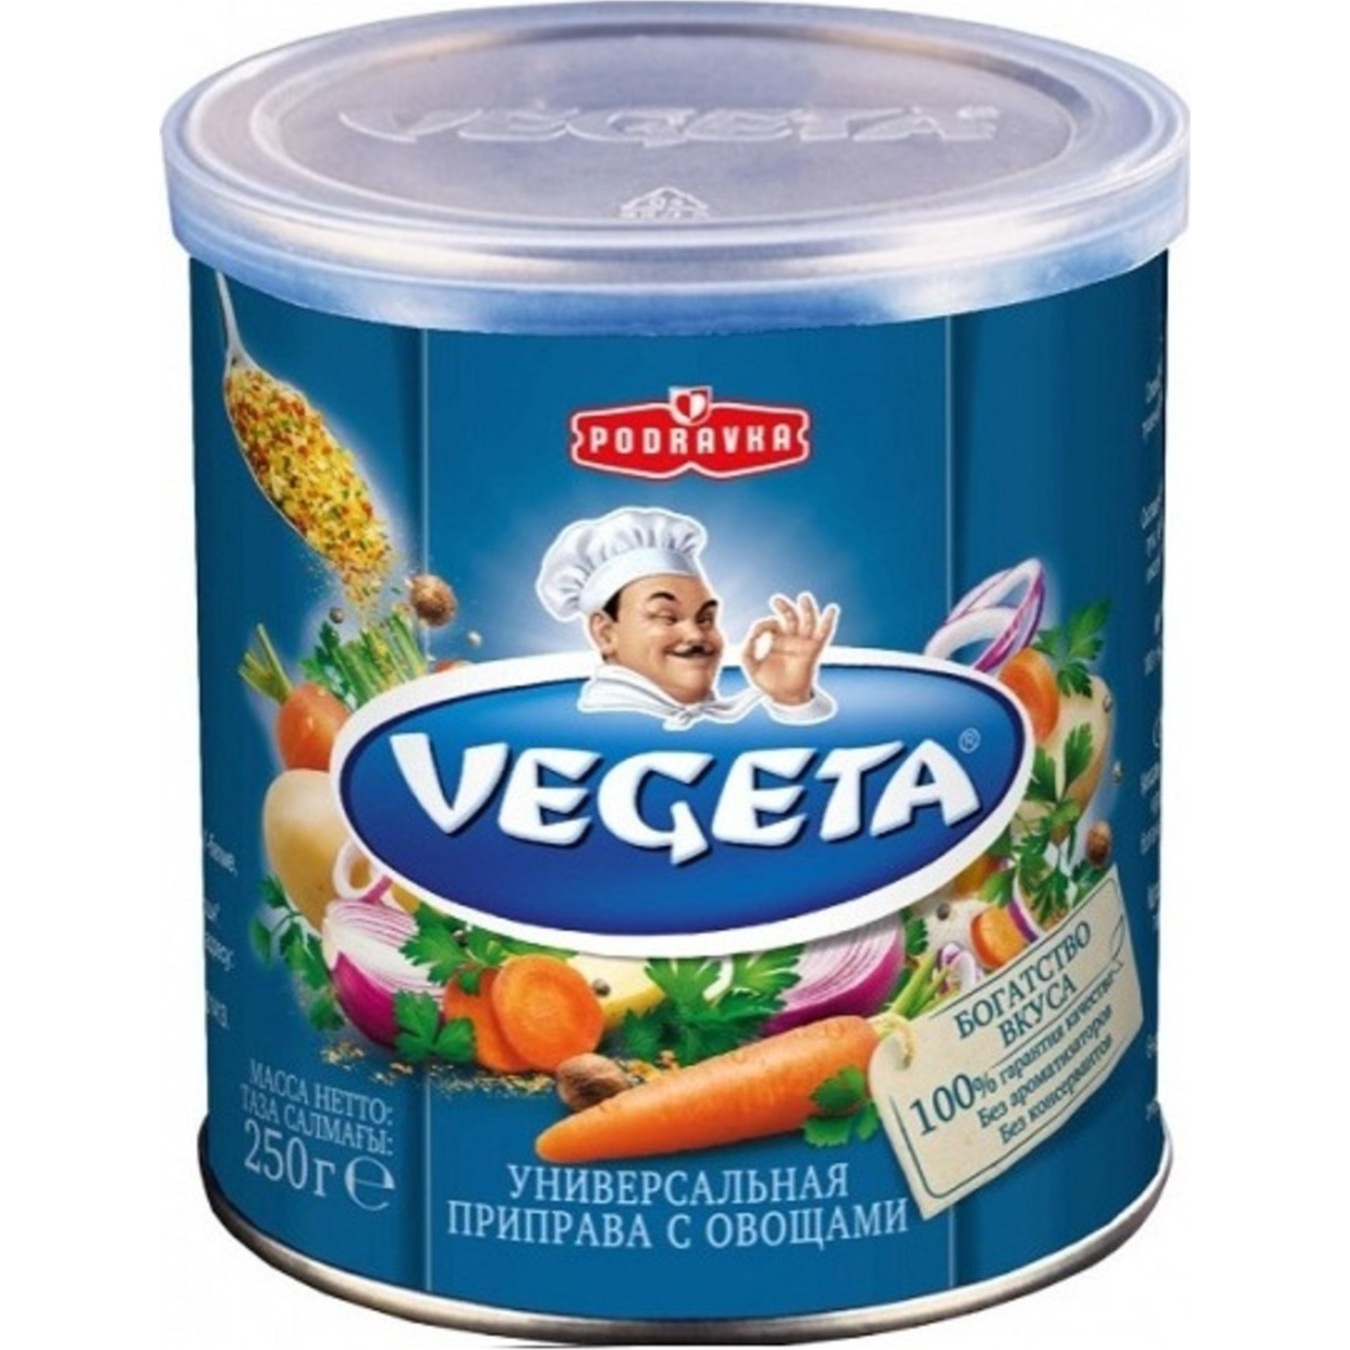 Vegeta Vegetables Spices 250g